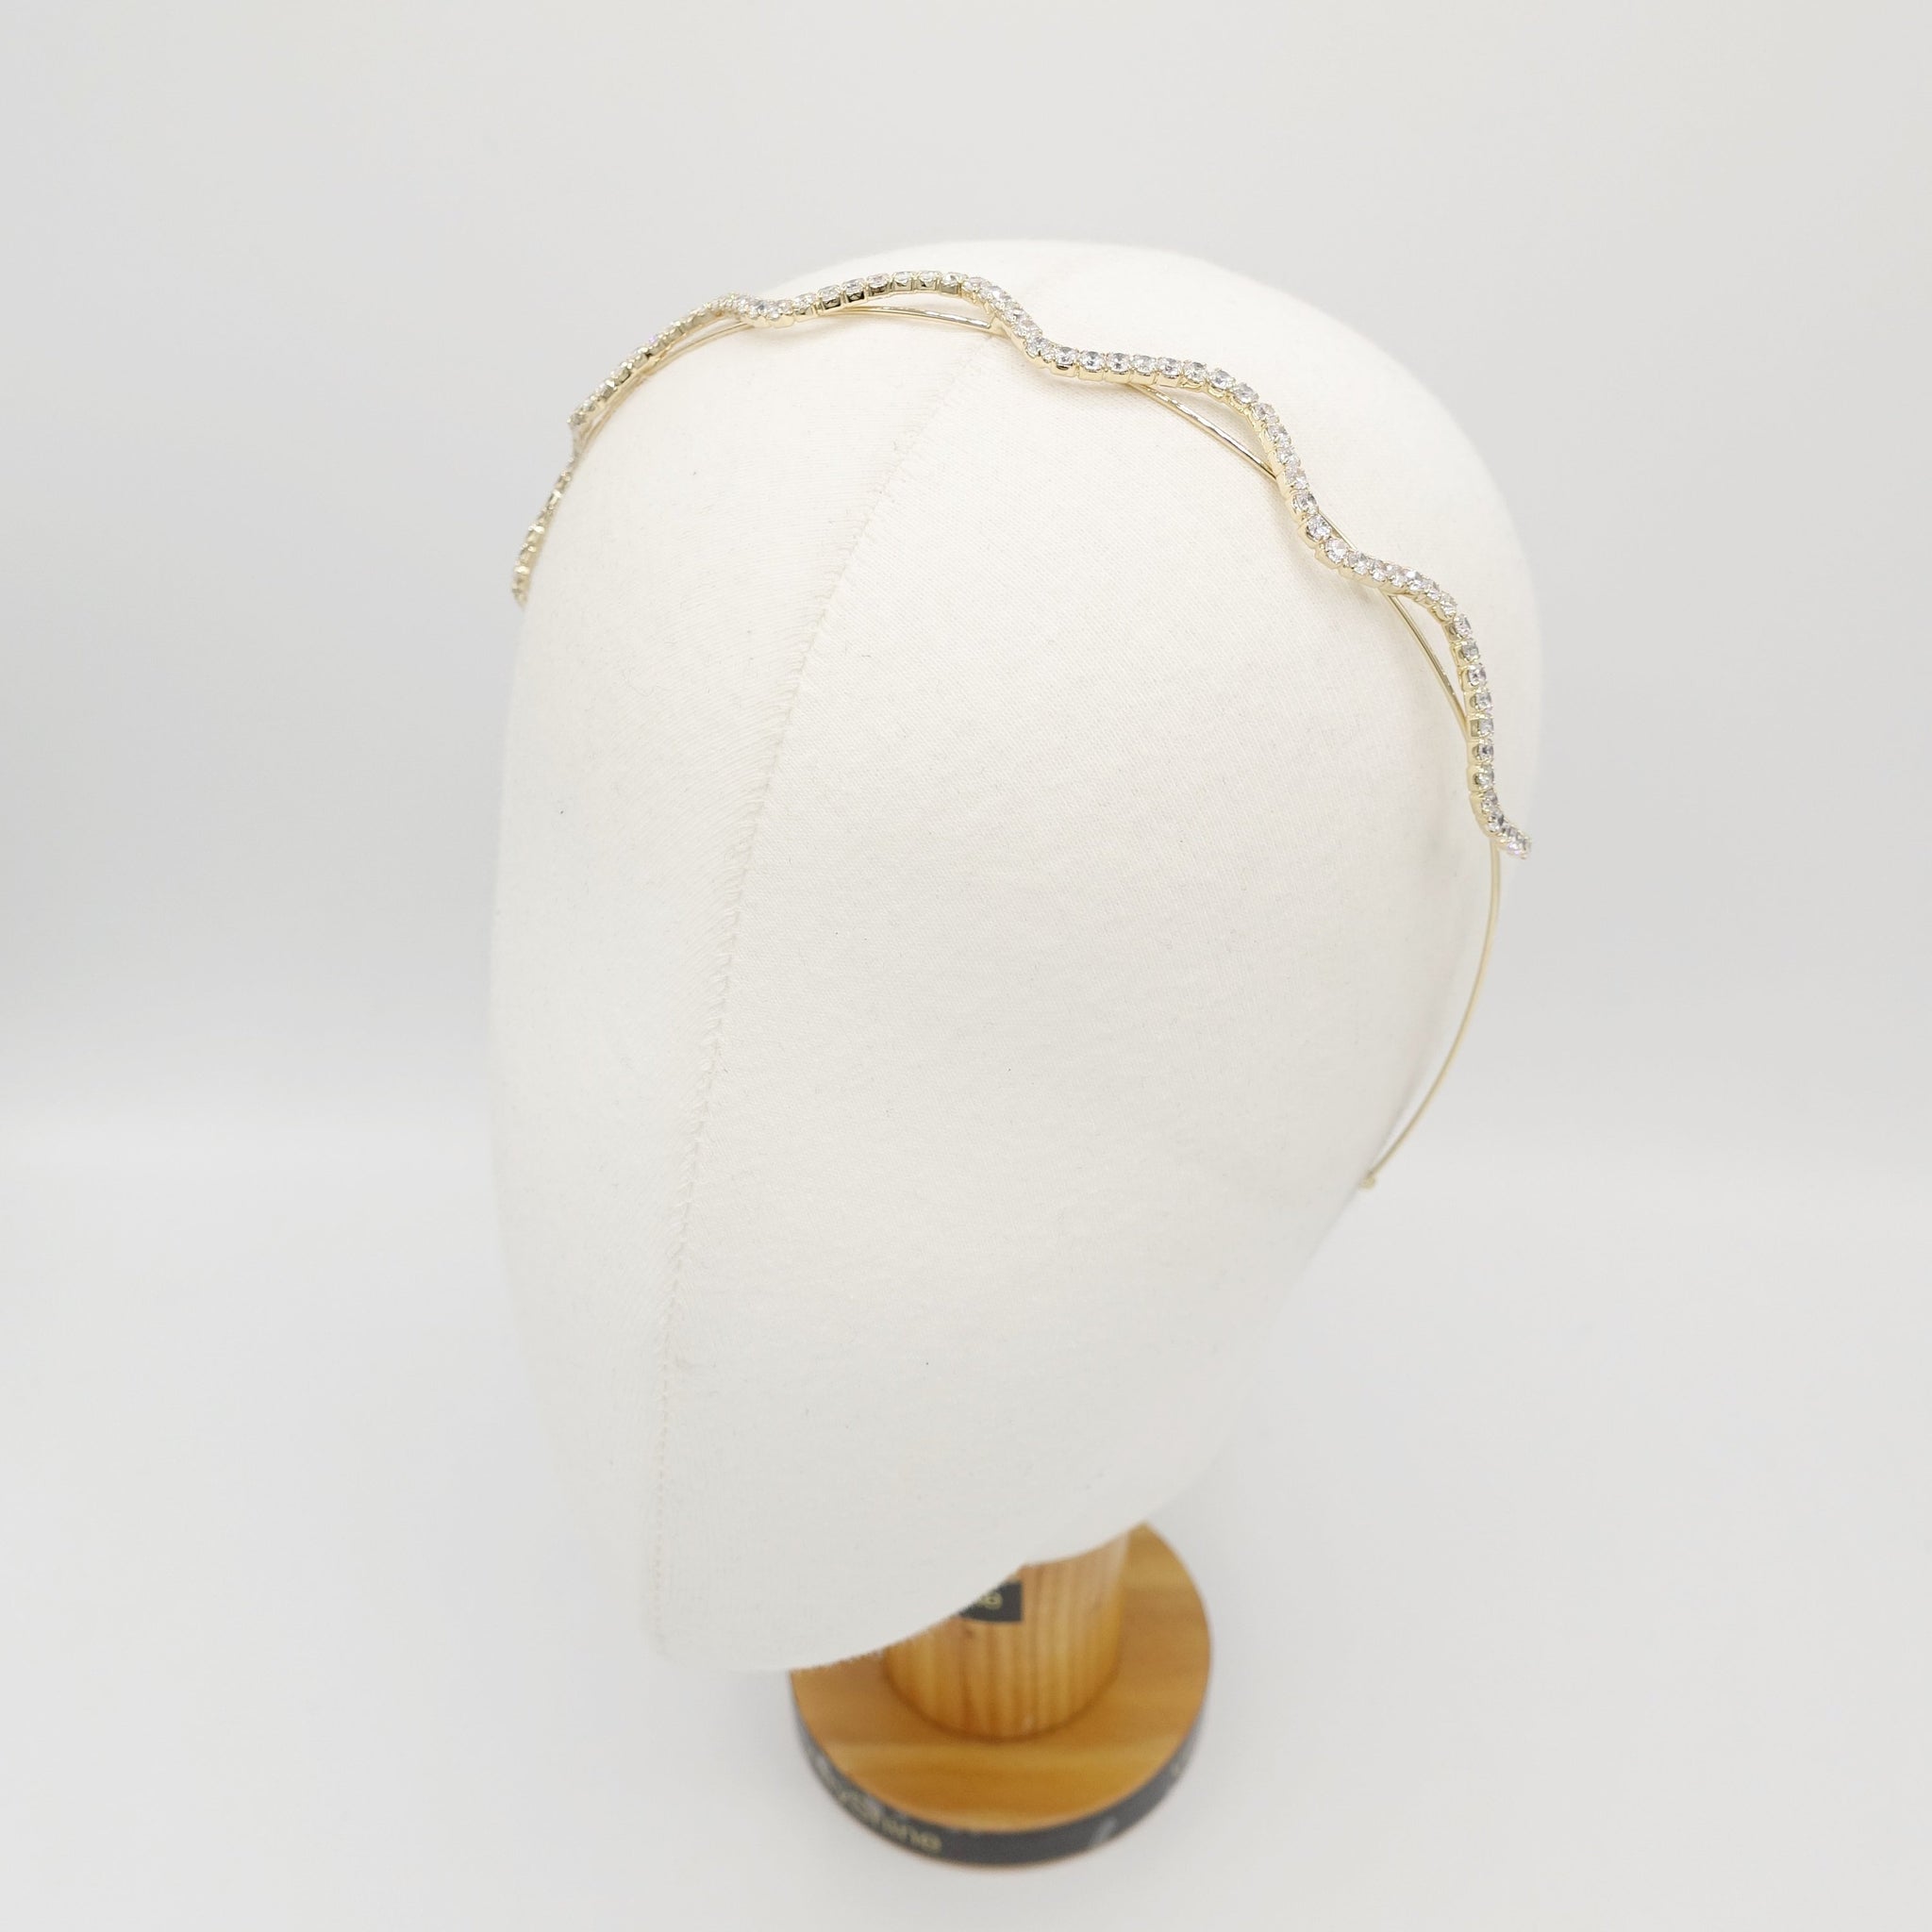 VeryShine Headband Wave gold rhinestone thin headband bling jewel hairband for women